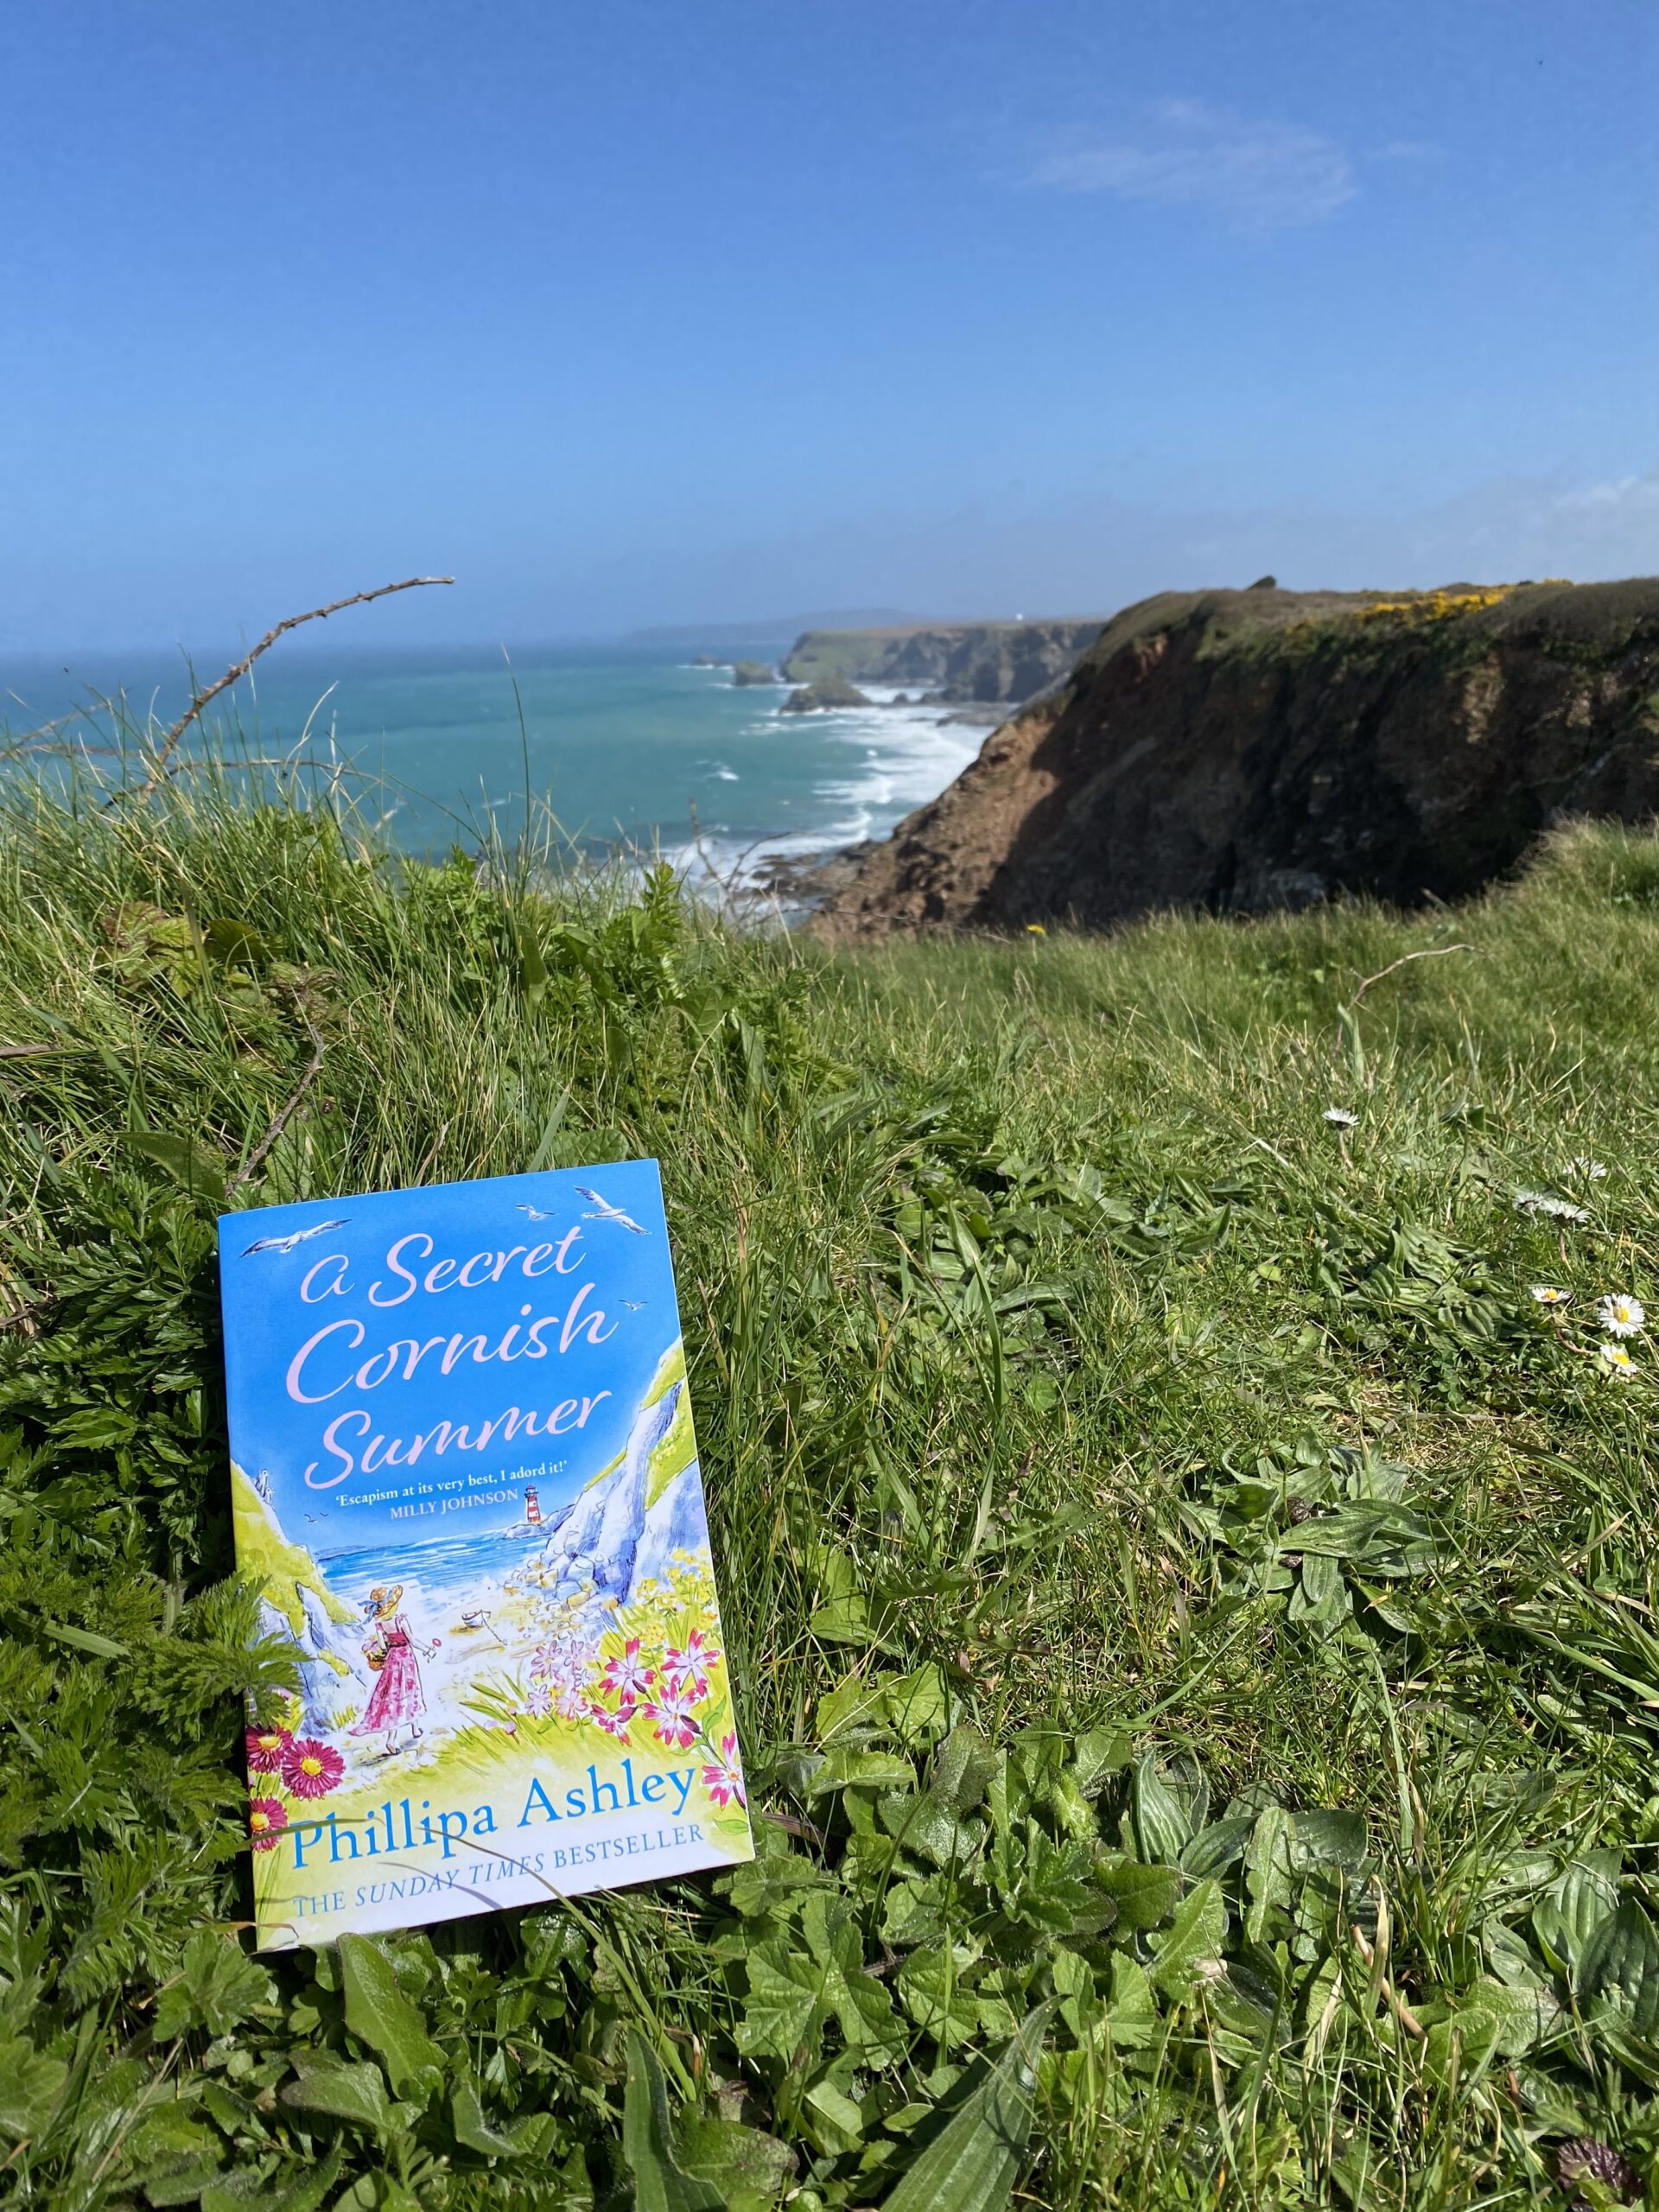 A Secret Cornish Summer by Phillipa Ashley overlooking the Cornish coast 